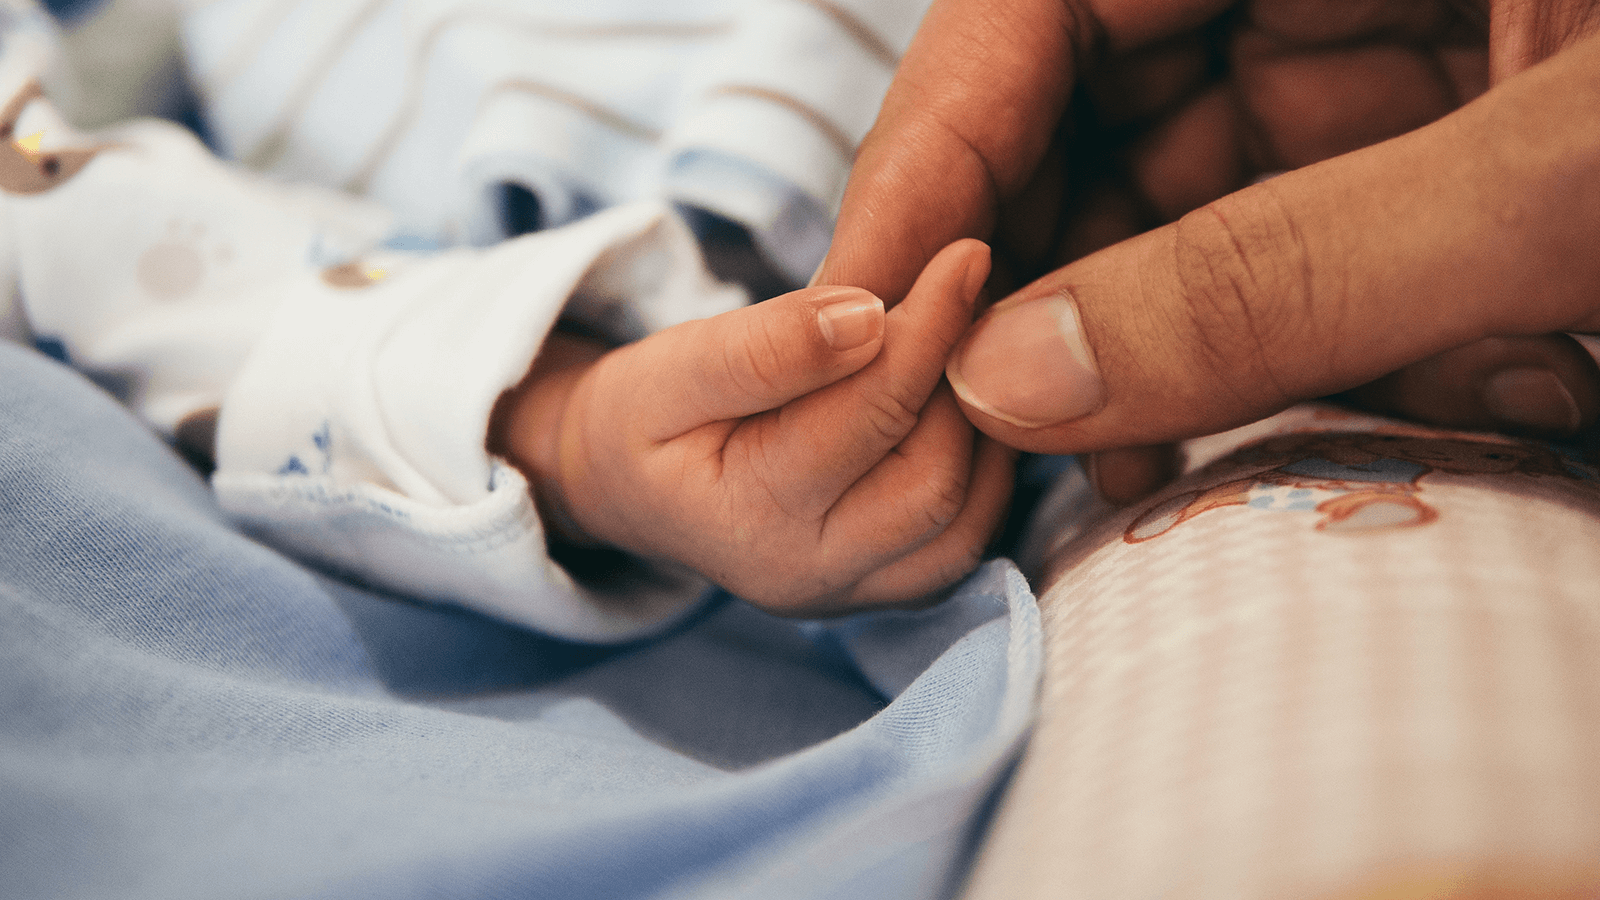 An adult hand holding a newborn baby's hand.